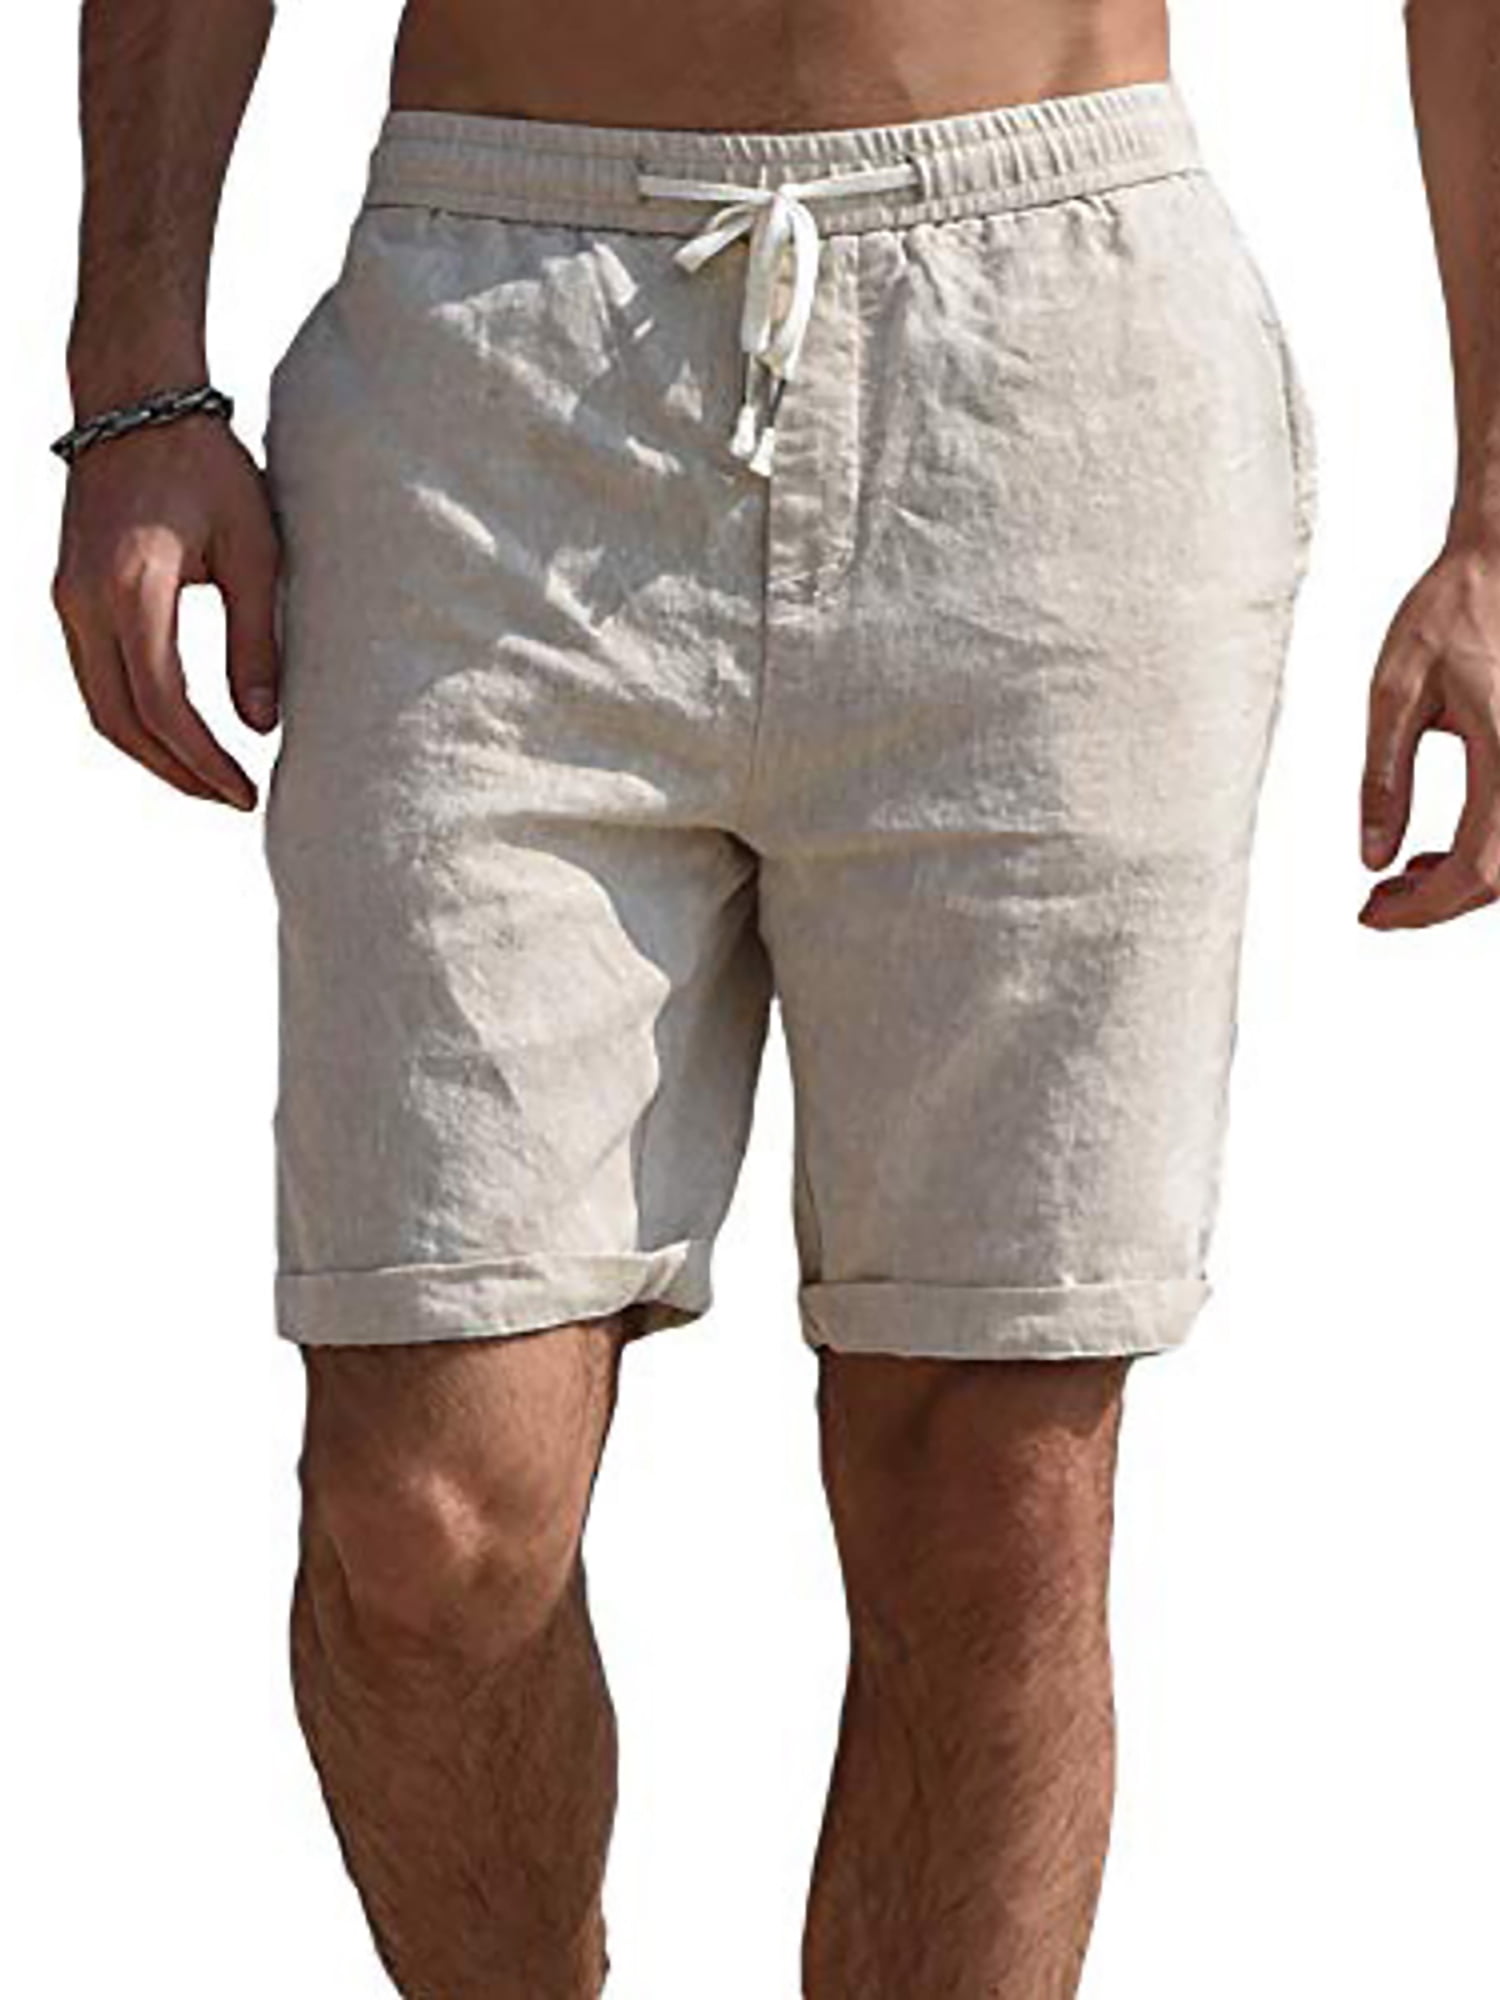 Men's Cotton Linen Shorts Elasticated Waist Drawstring Summer Casual Half Pants